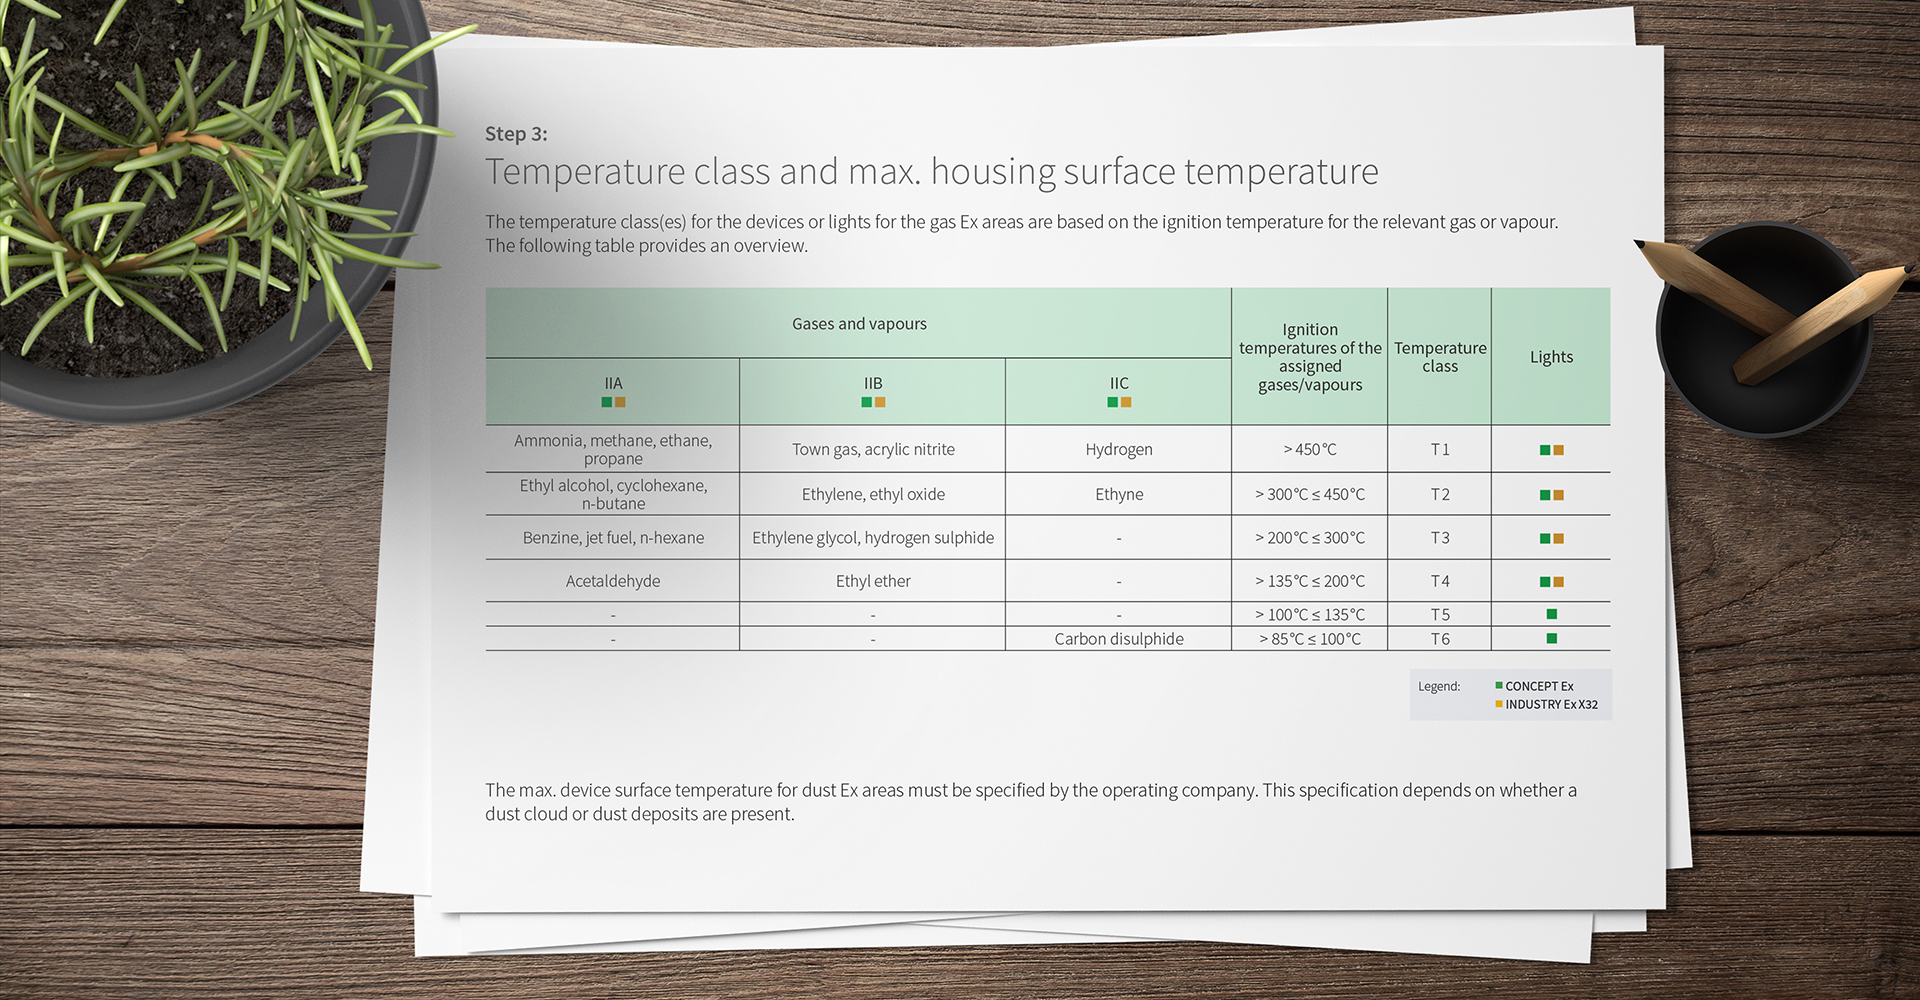 Step 3: Temperature class(es) and max. enclosure surface temperature